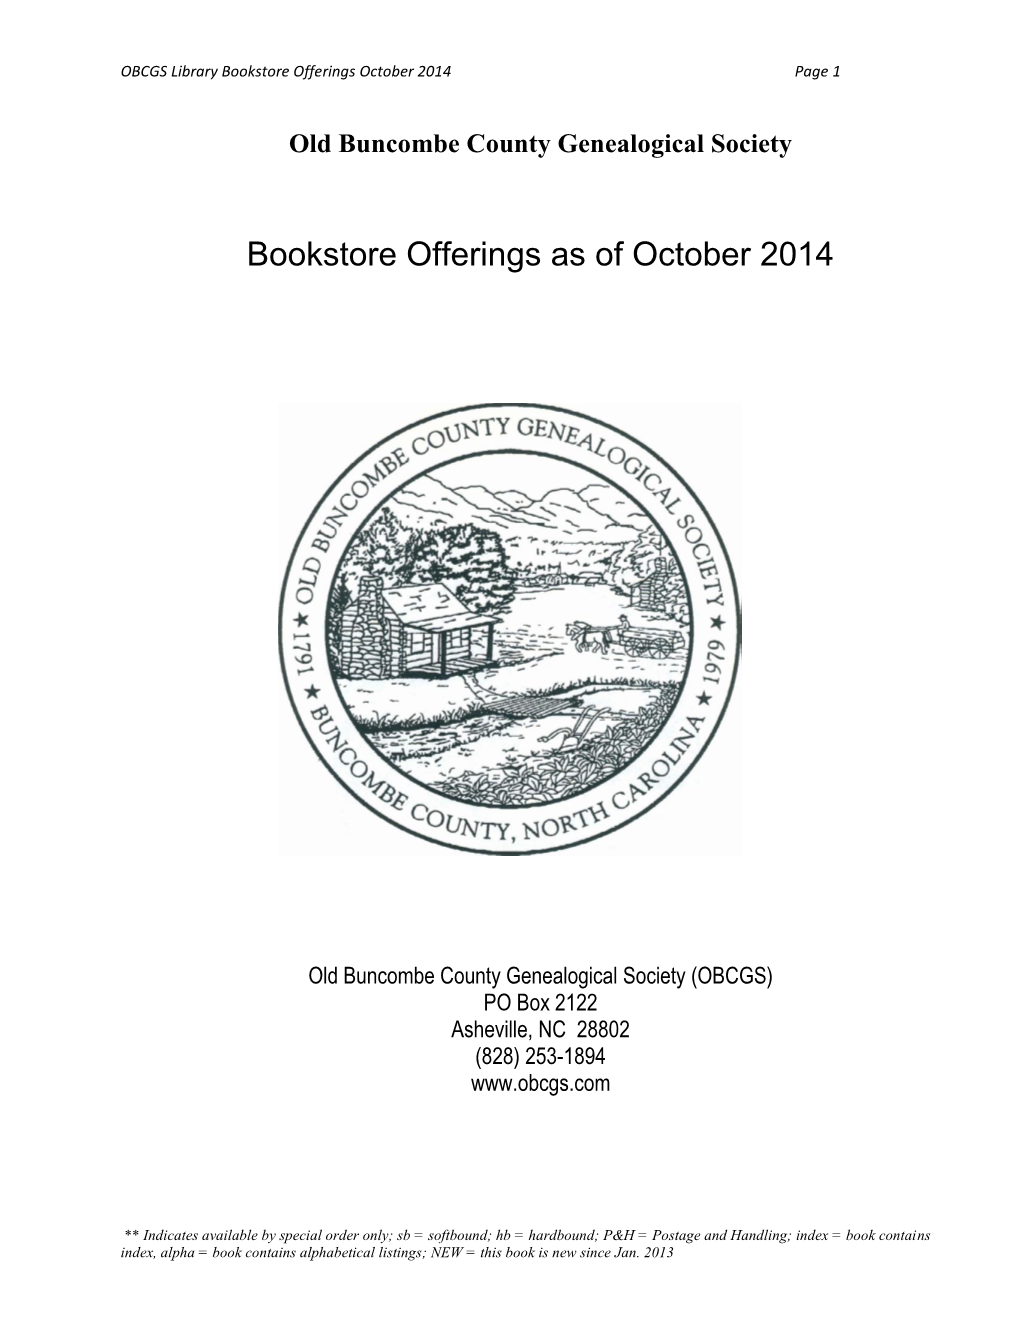 Old Buncombe County Genealogy Society